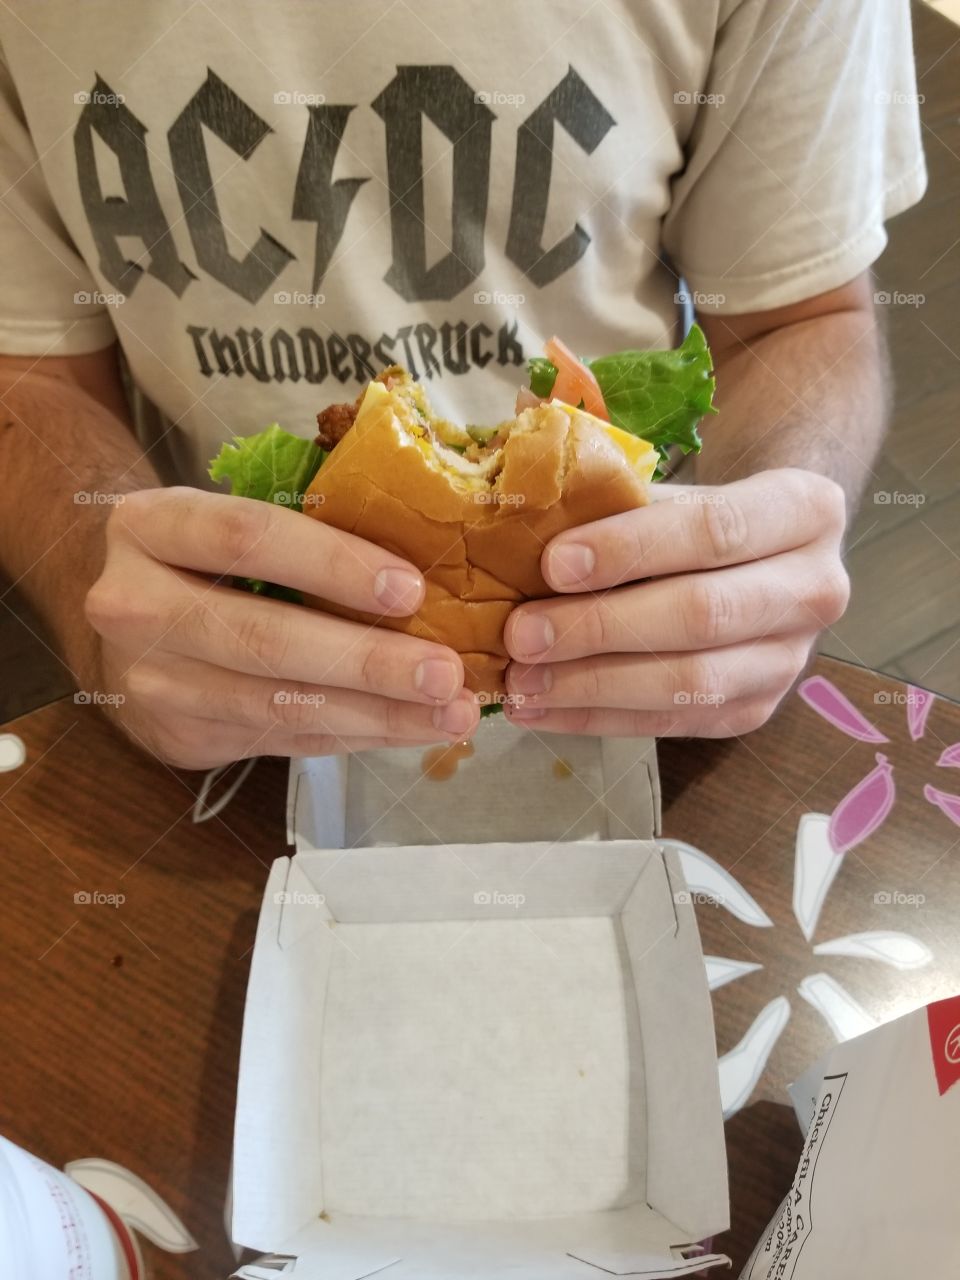 Enjoying a Burger